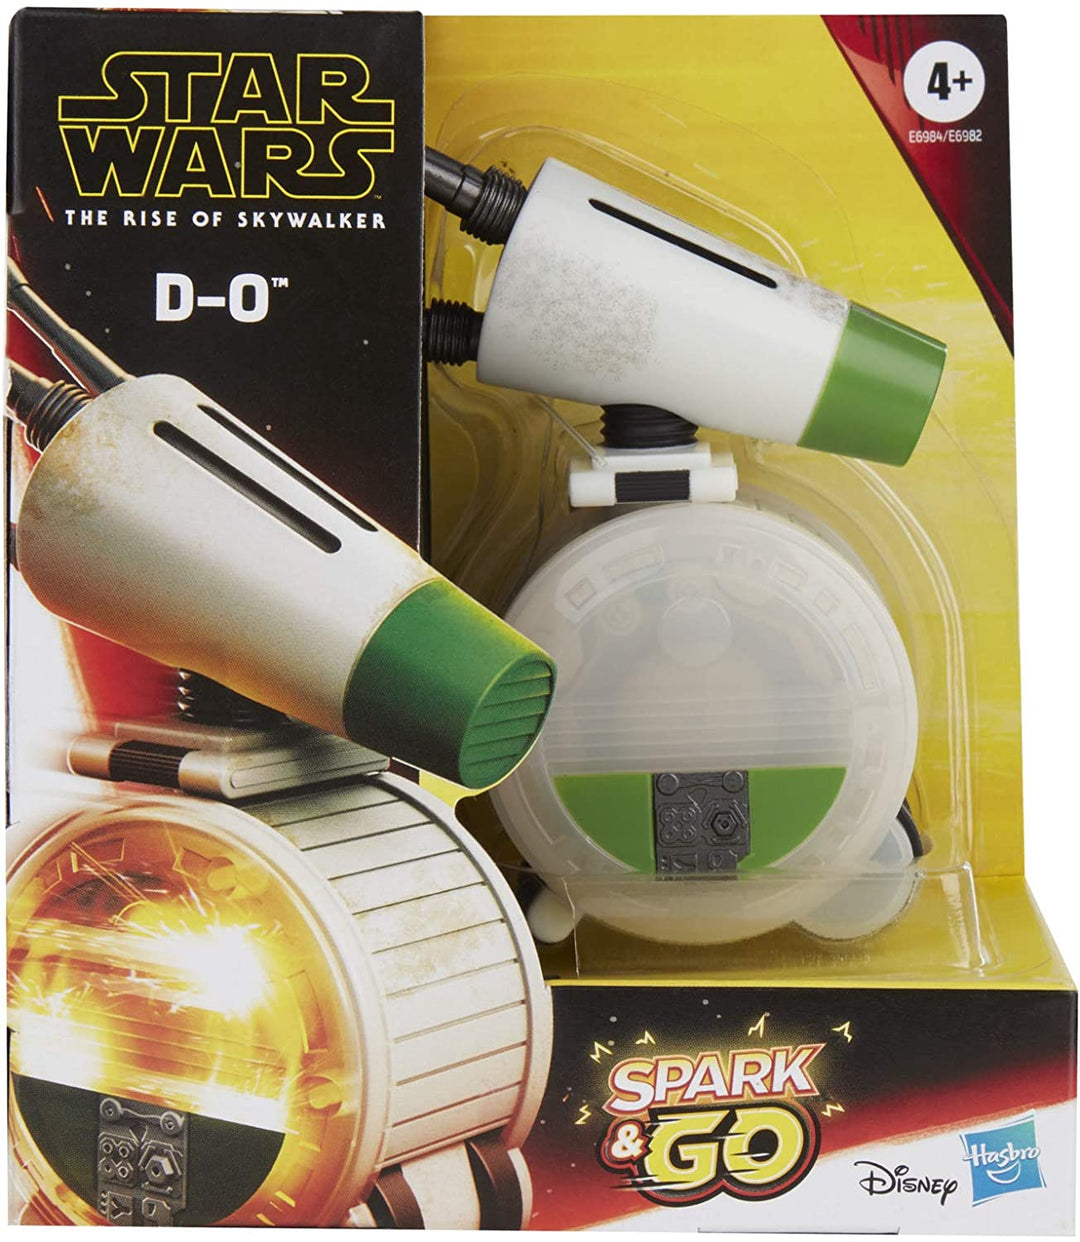 Star Wars SW E9 IP Spark and go D-O